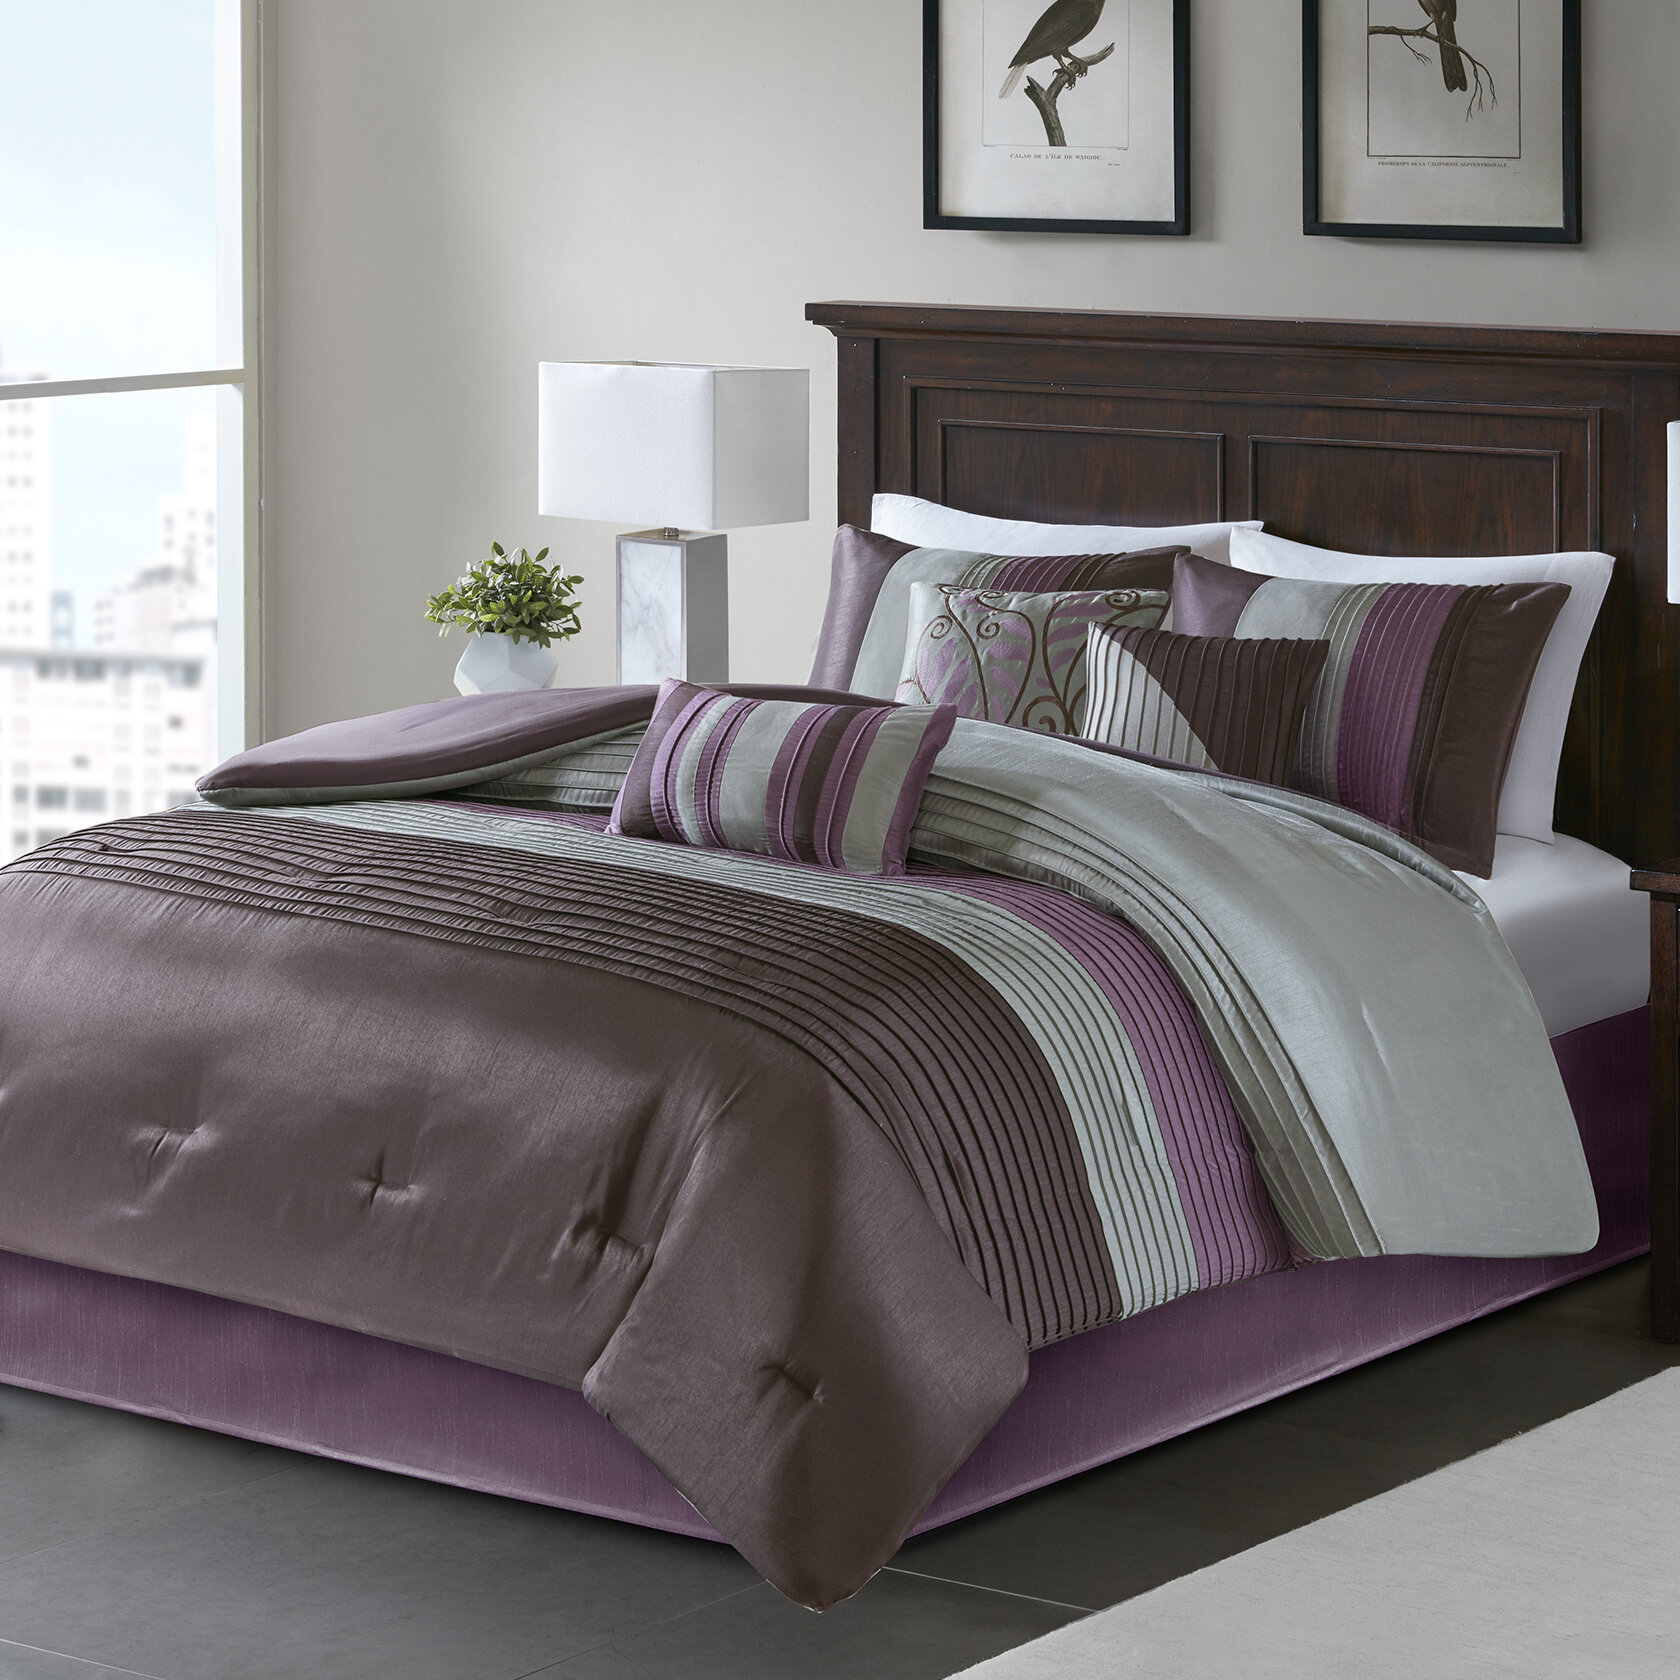 Kids Zone Home Linen 3 Piece King/Cal King Over Size Bedspread Set Damask Purple 